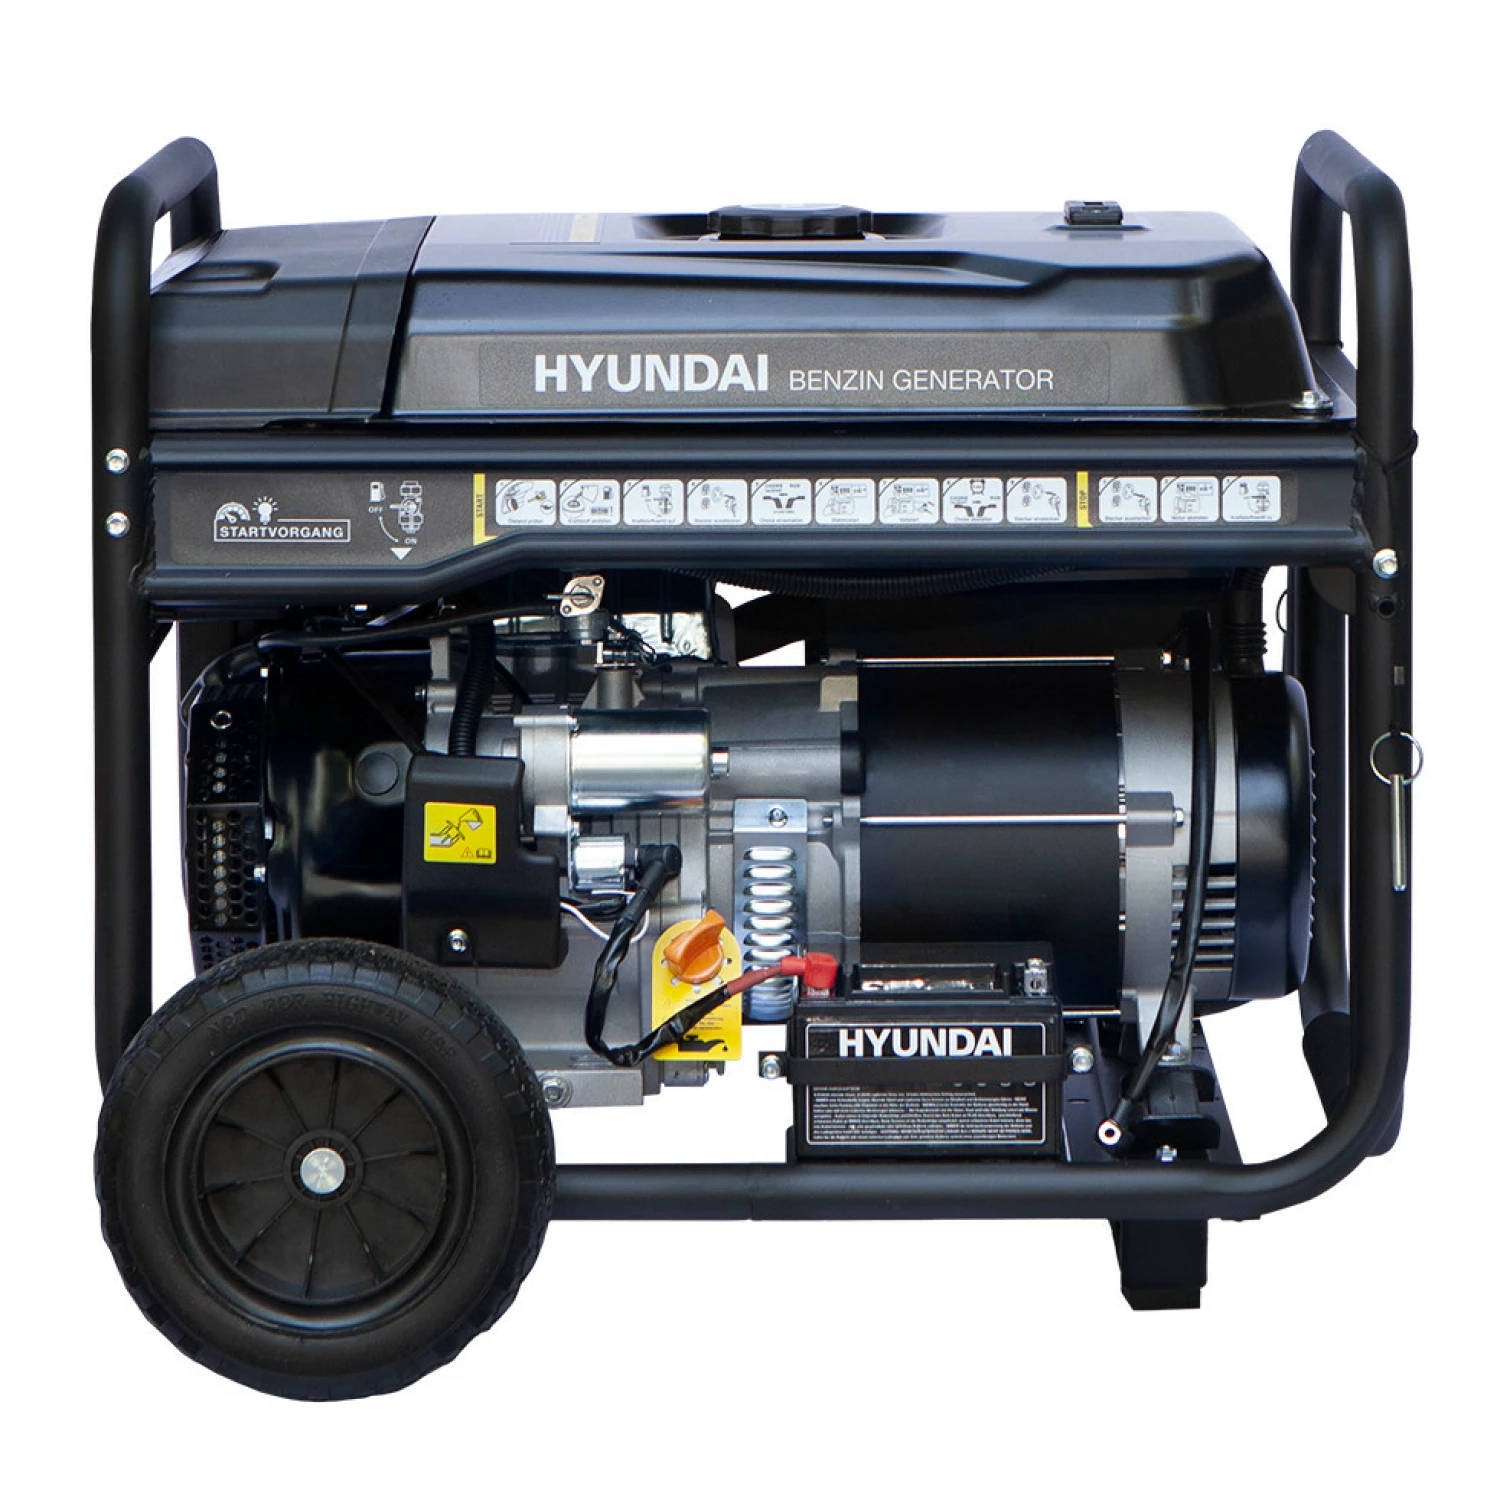 Hyundai HY8500LEK-T Benzinegenerator-image